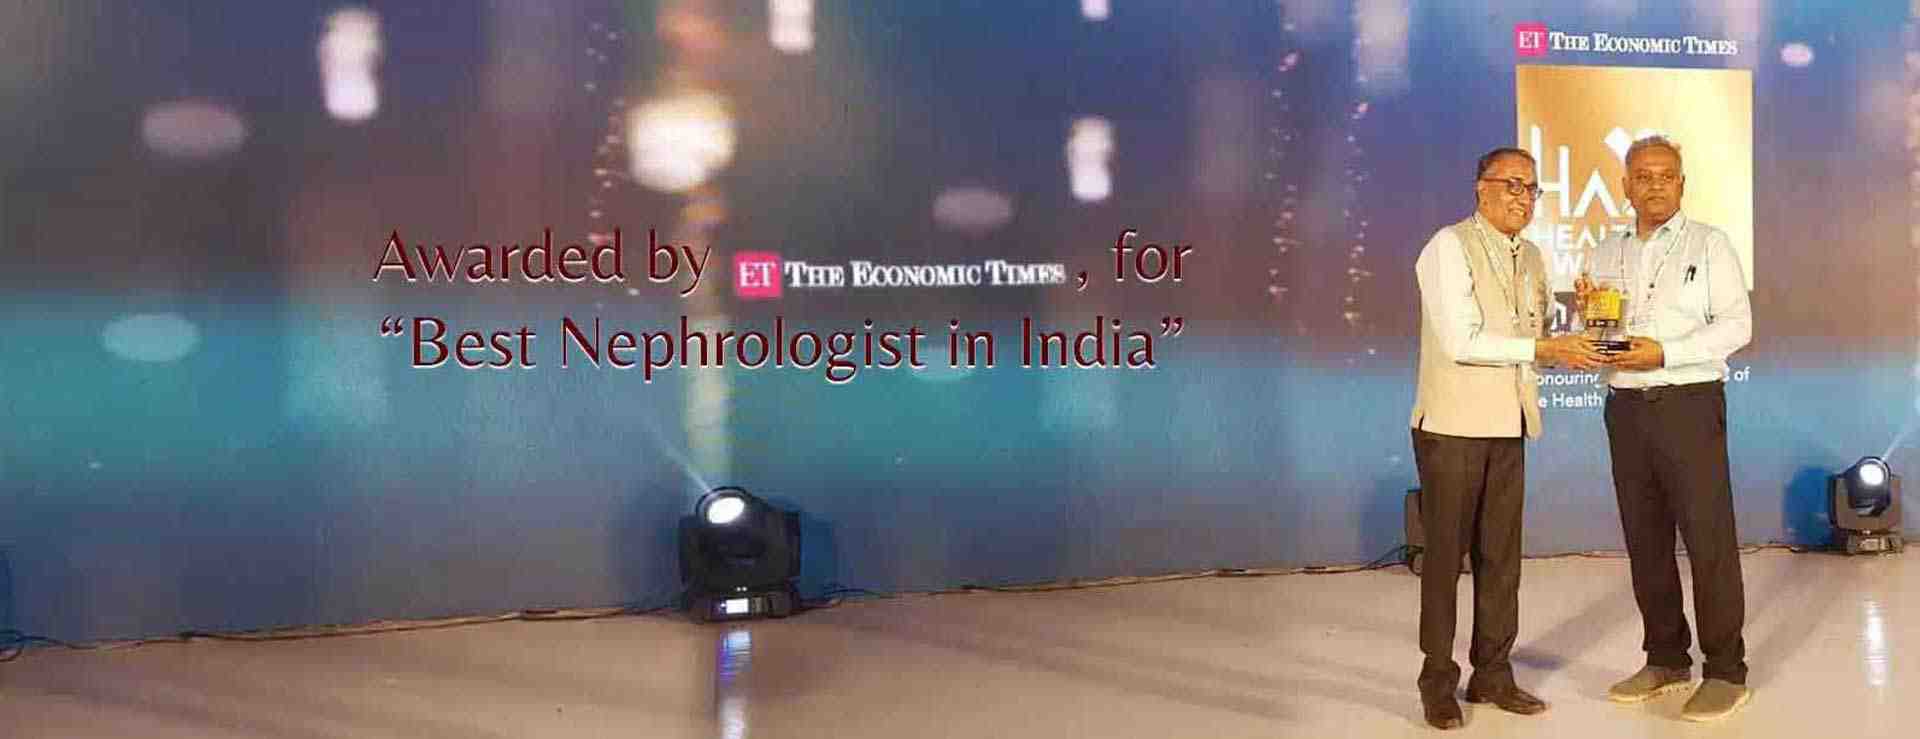 Kidney Stone Specialist in Delhi